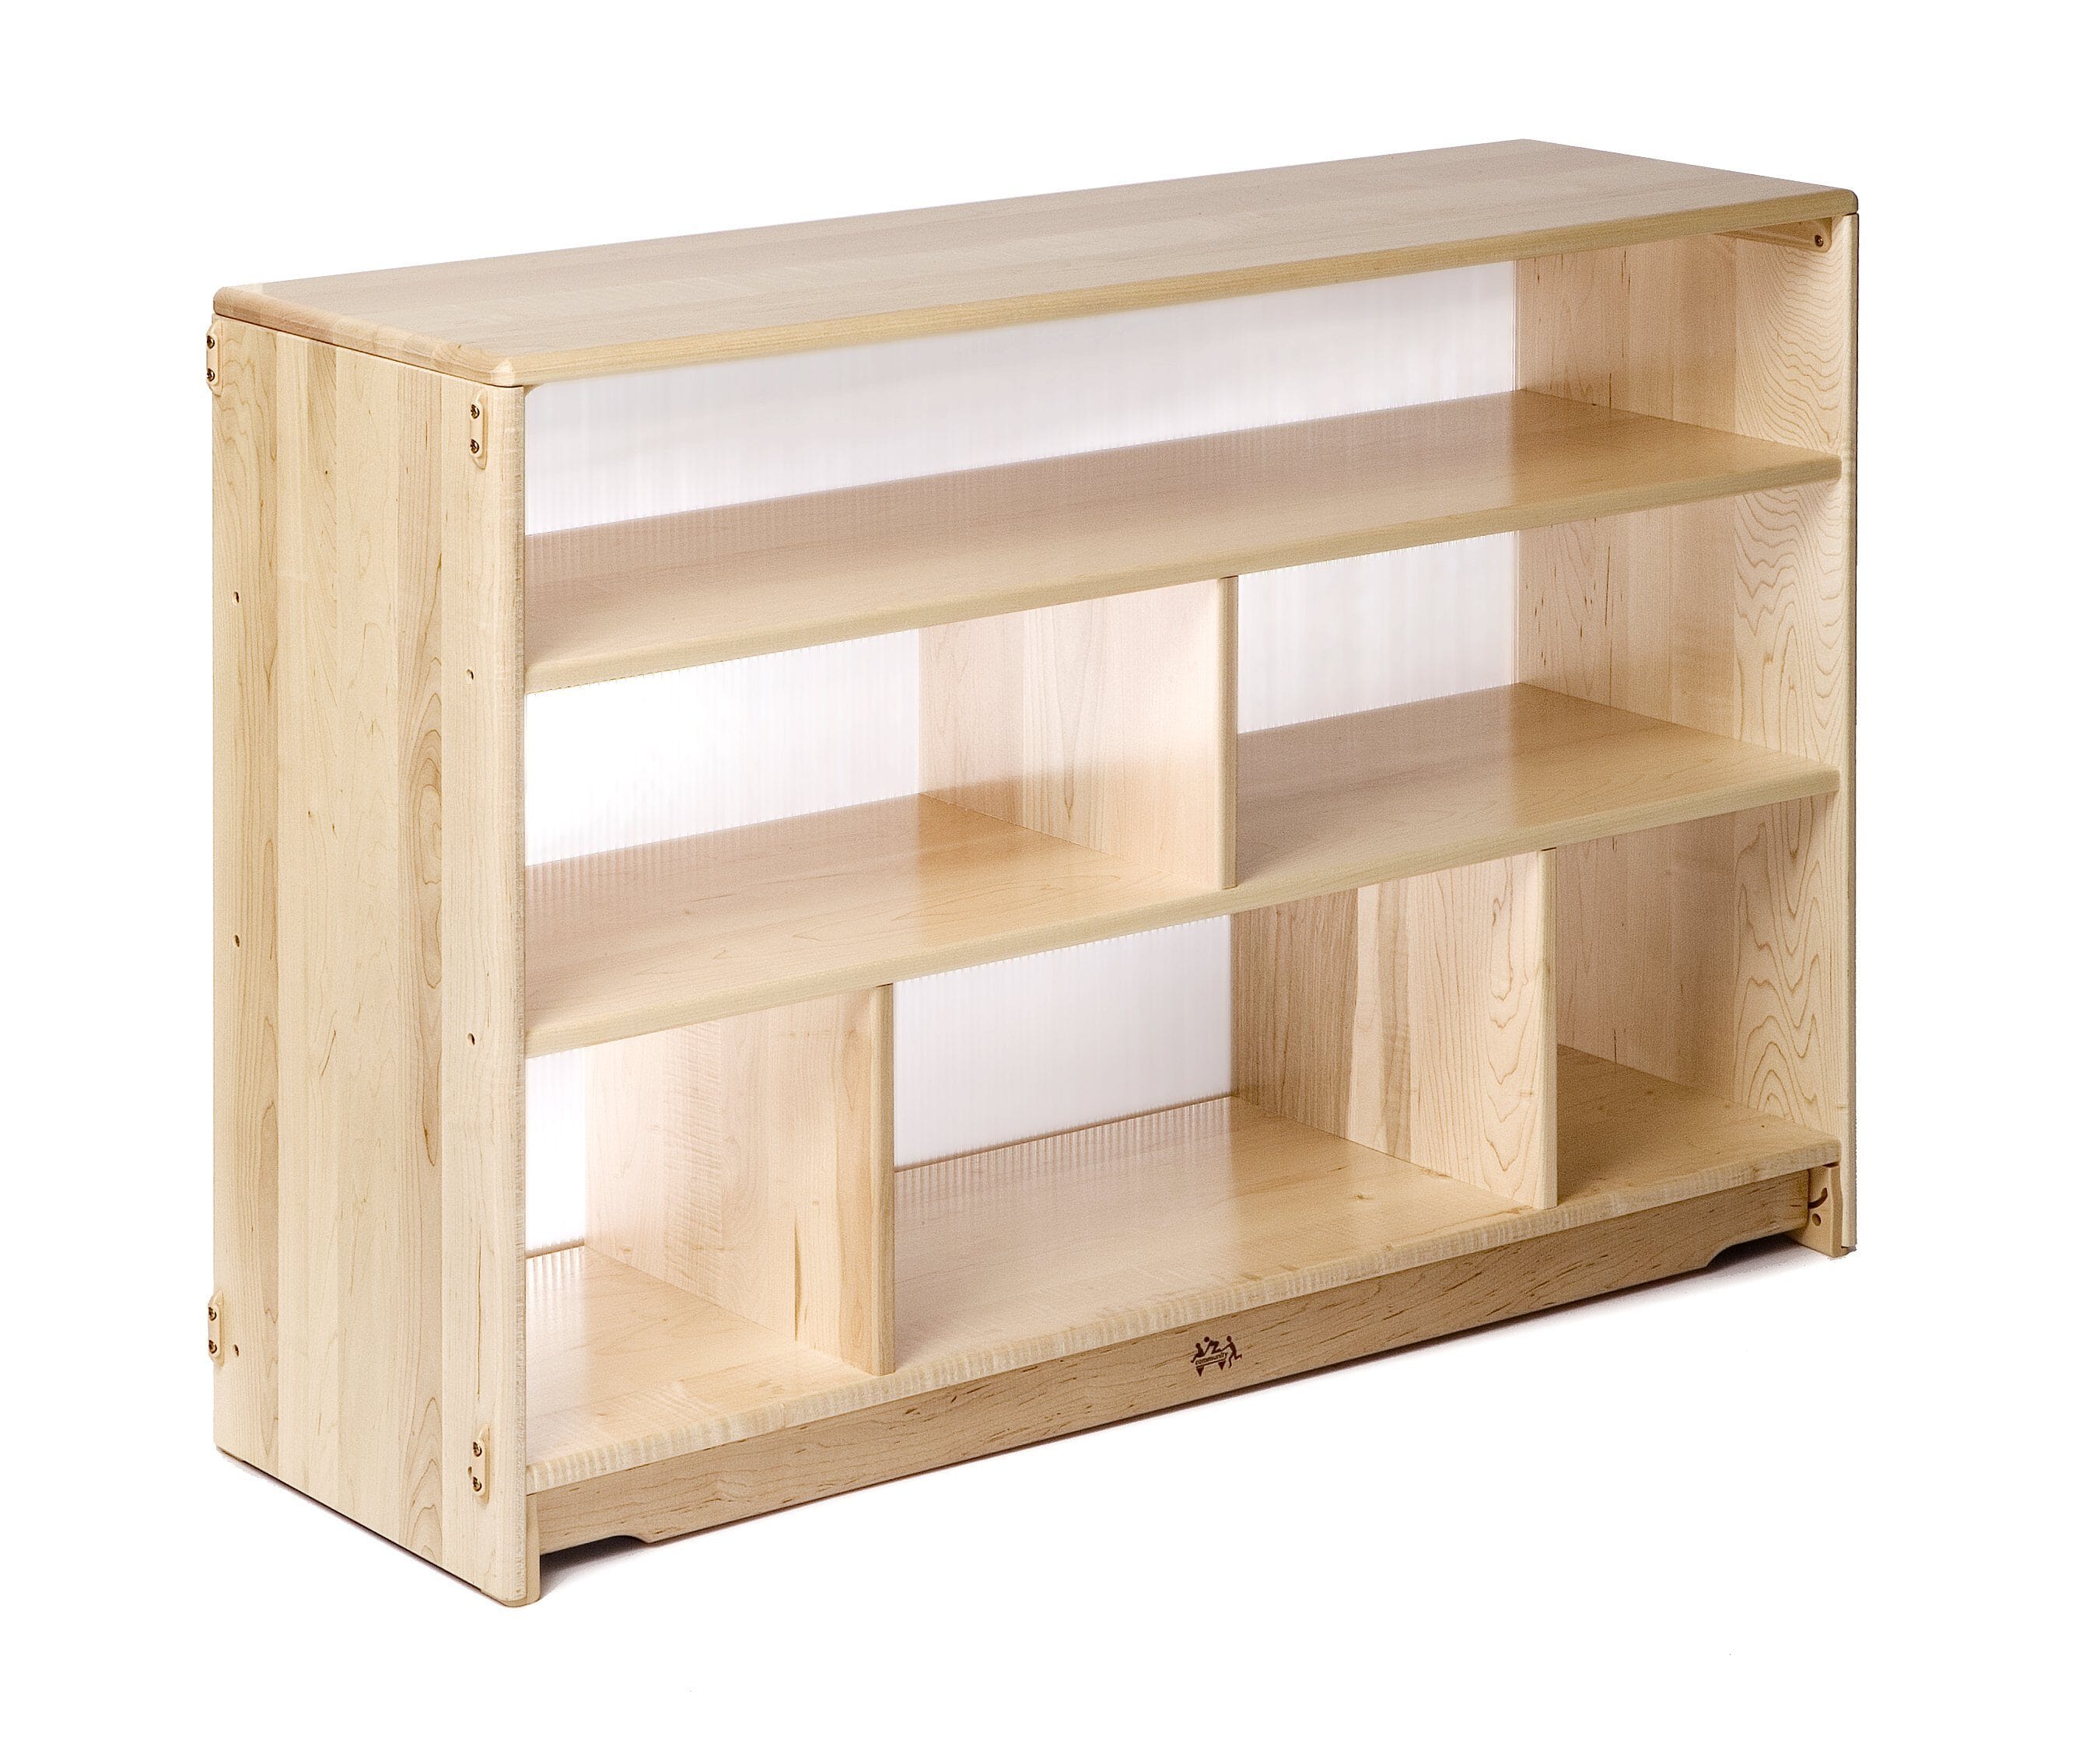 Translucent Fixed Shelf 32" by Community Playthings - louisekool